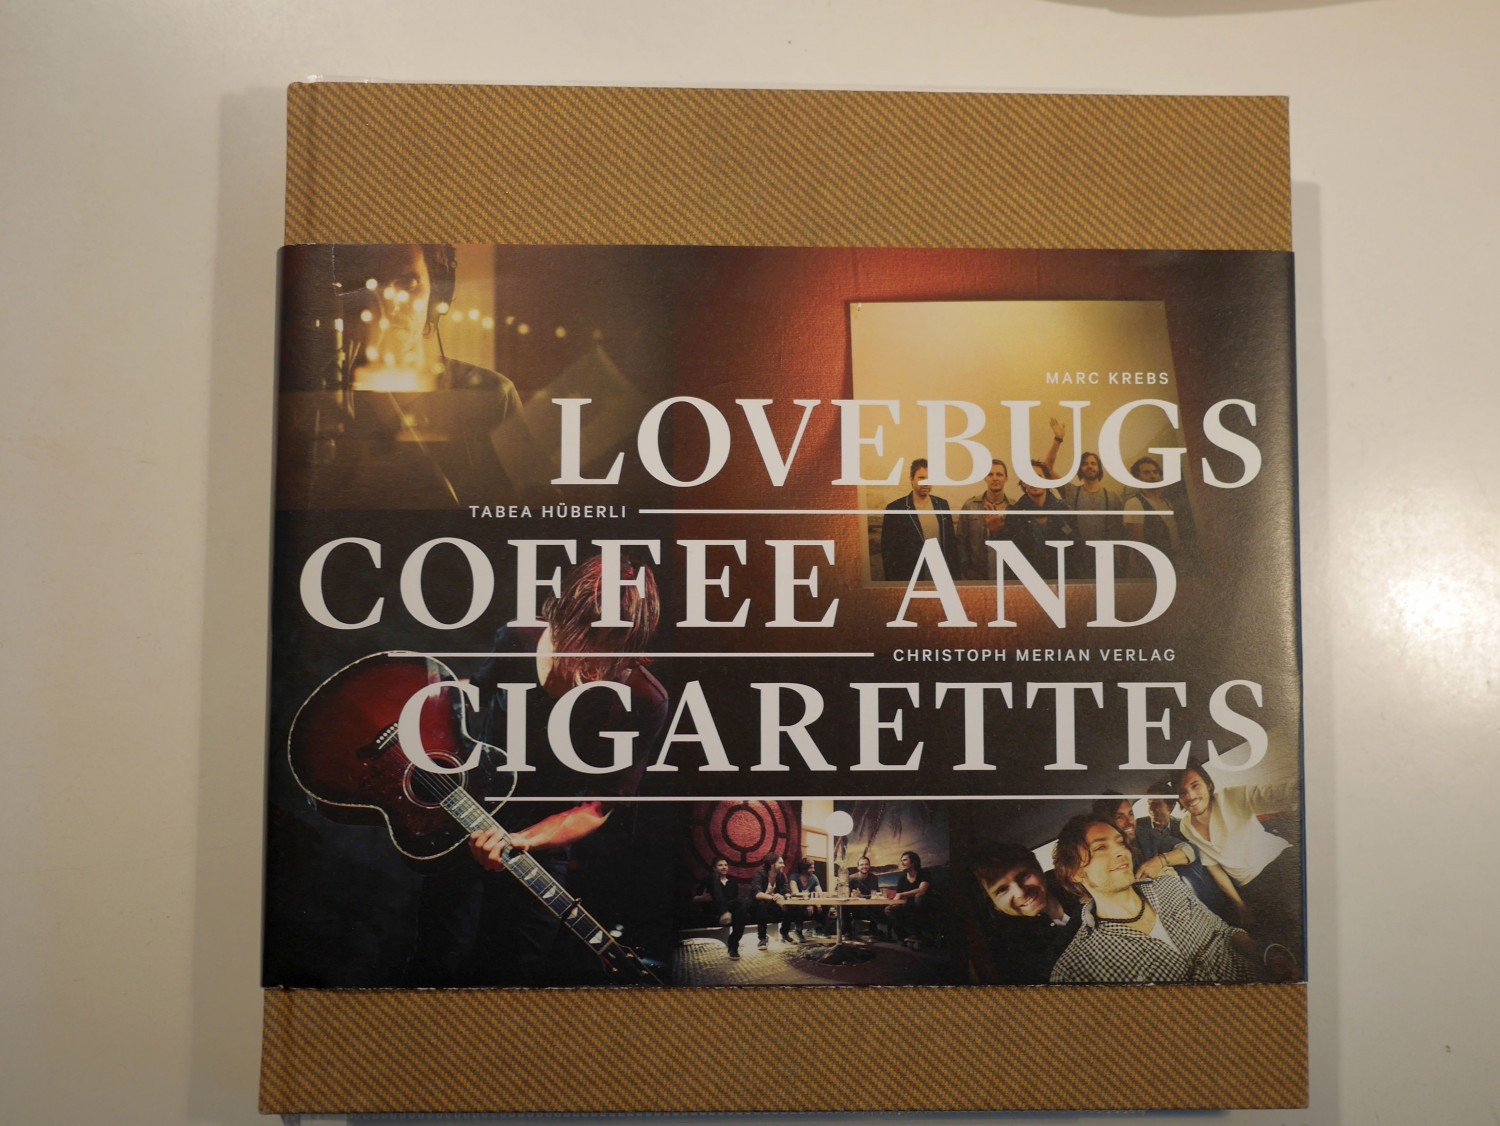 Lovebugs Coffee And Cigarettes Marc Krebs Buch Gebraucht Kaufen A02jm0jn01zzy